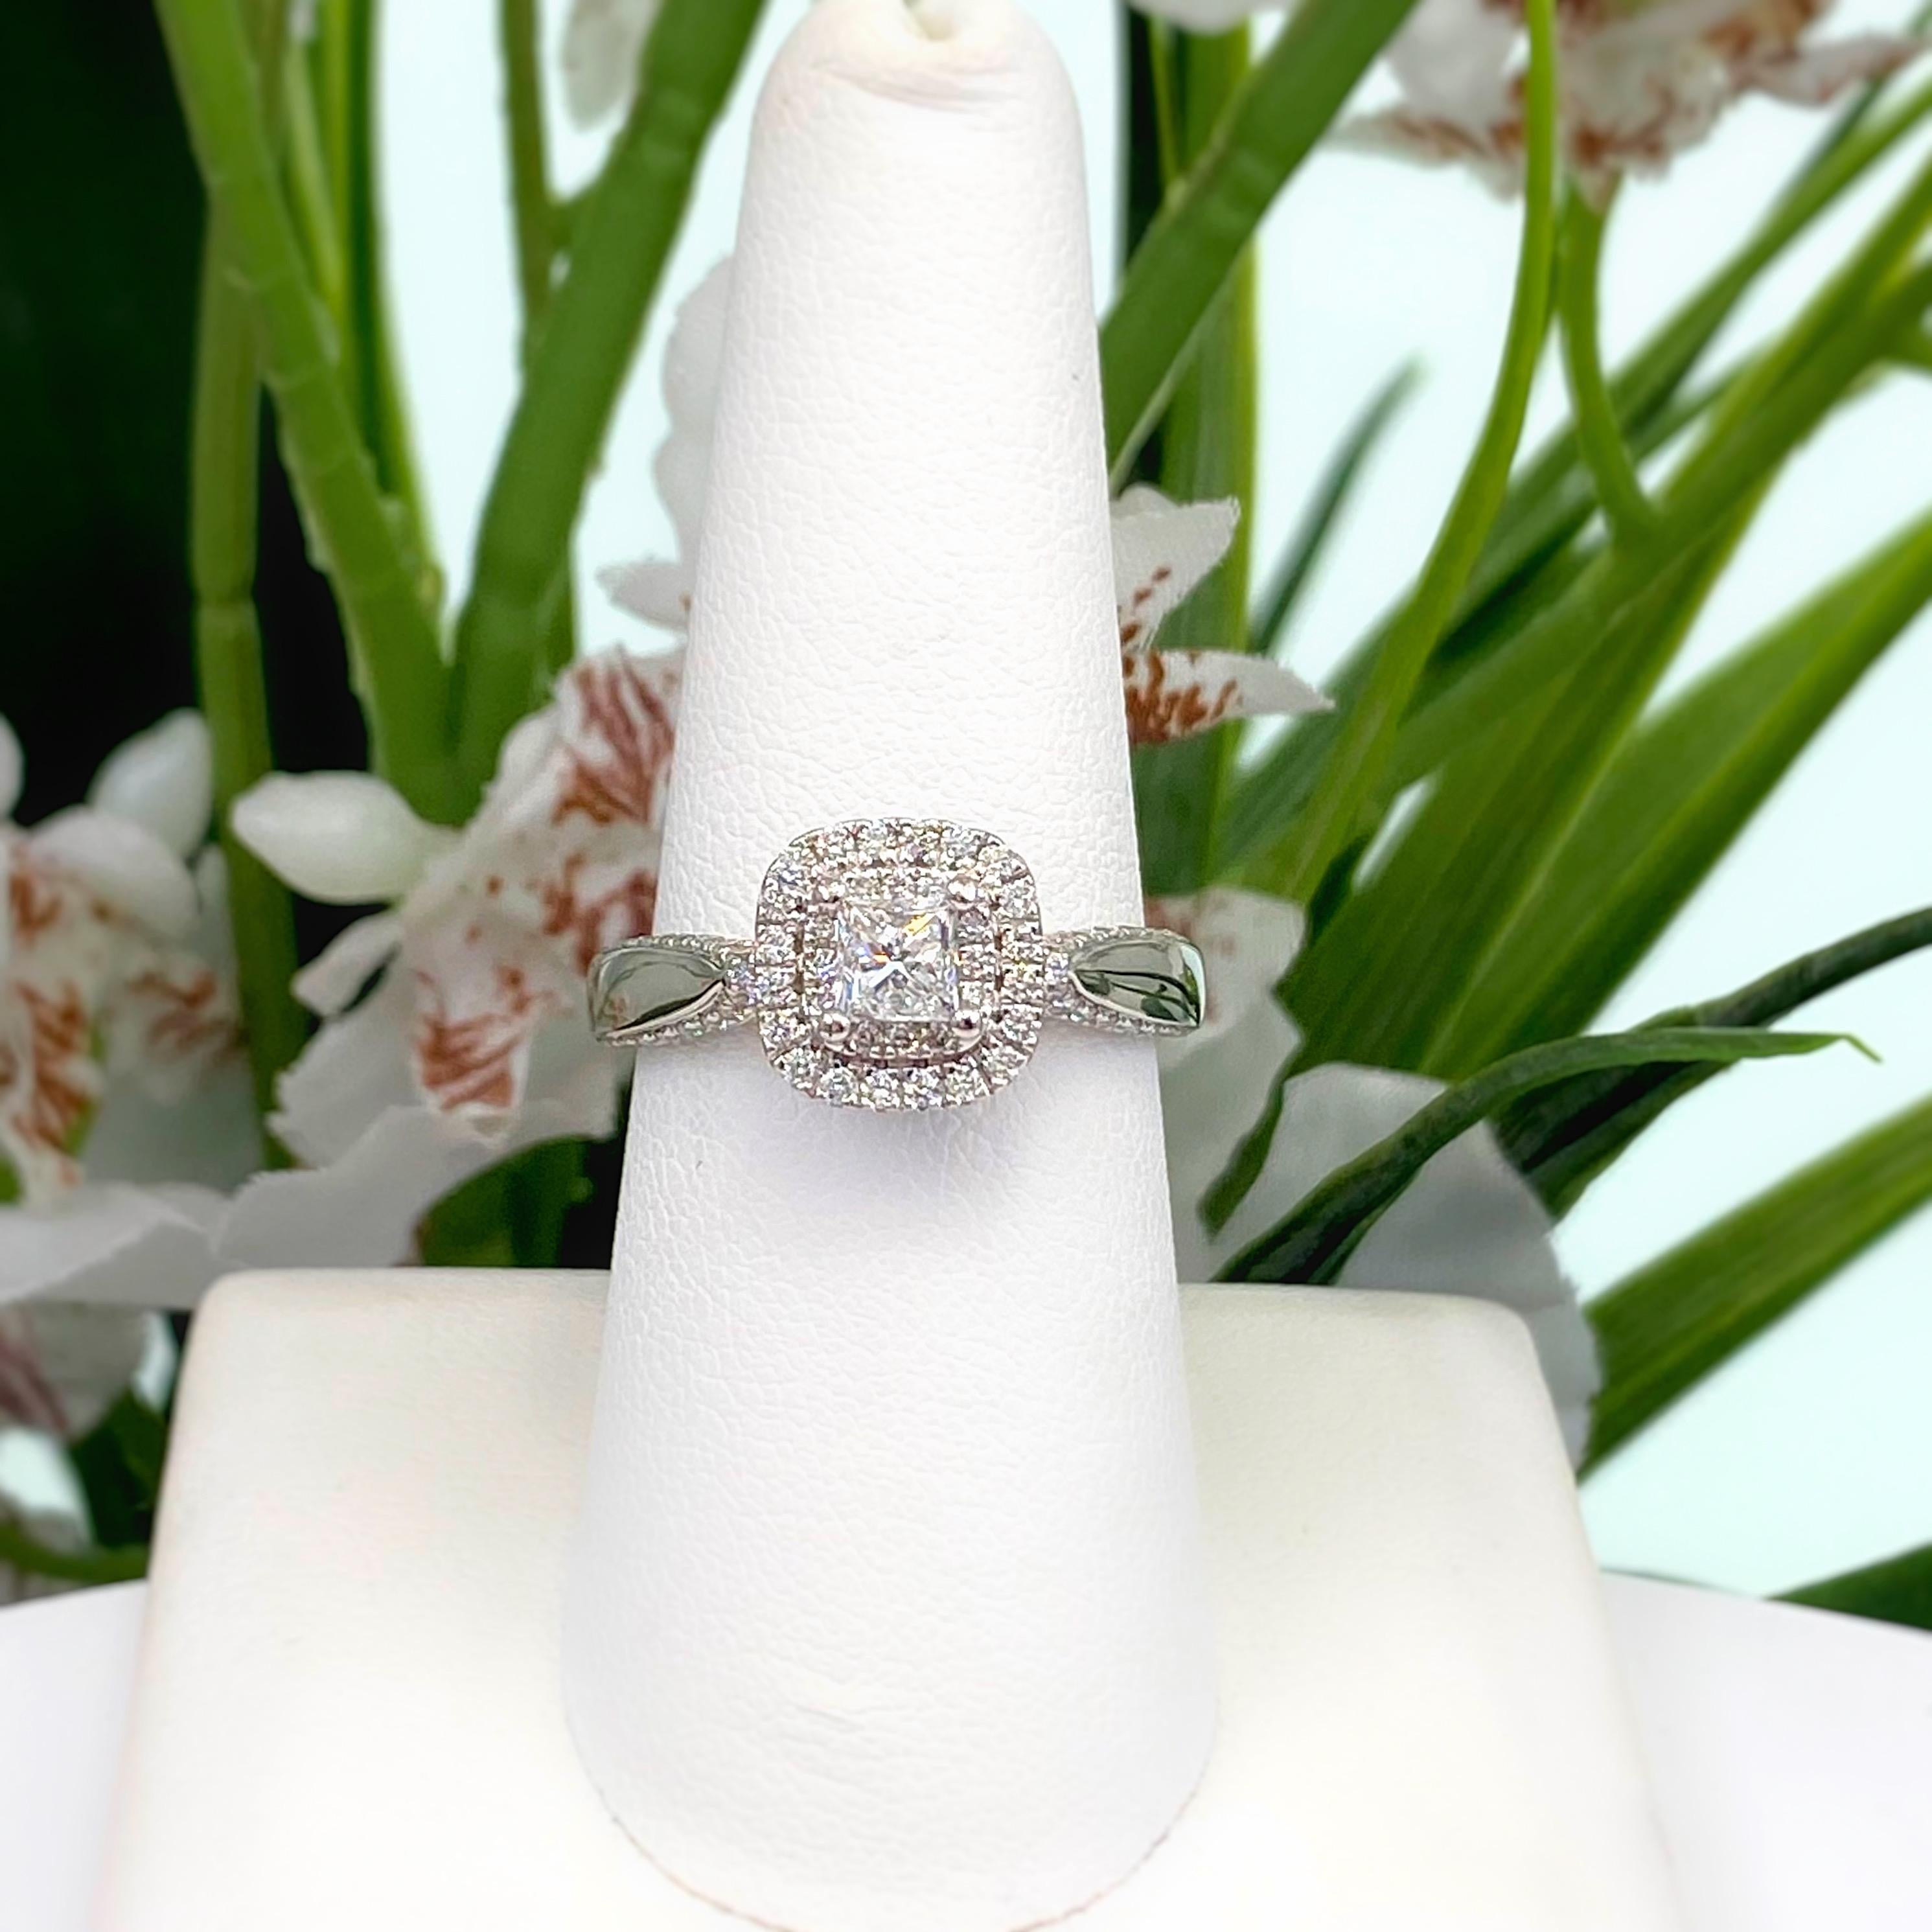 8 carat princess cut diamond ring